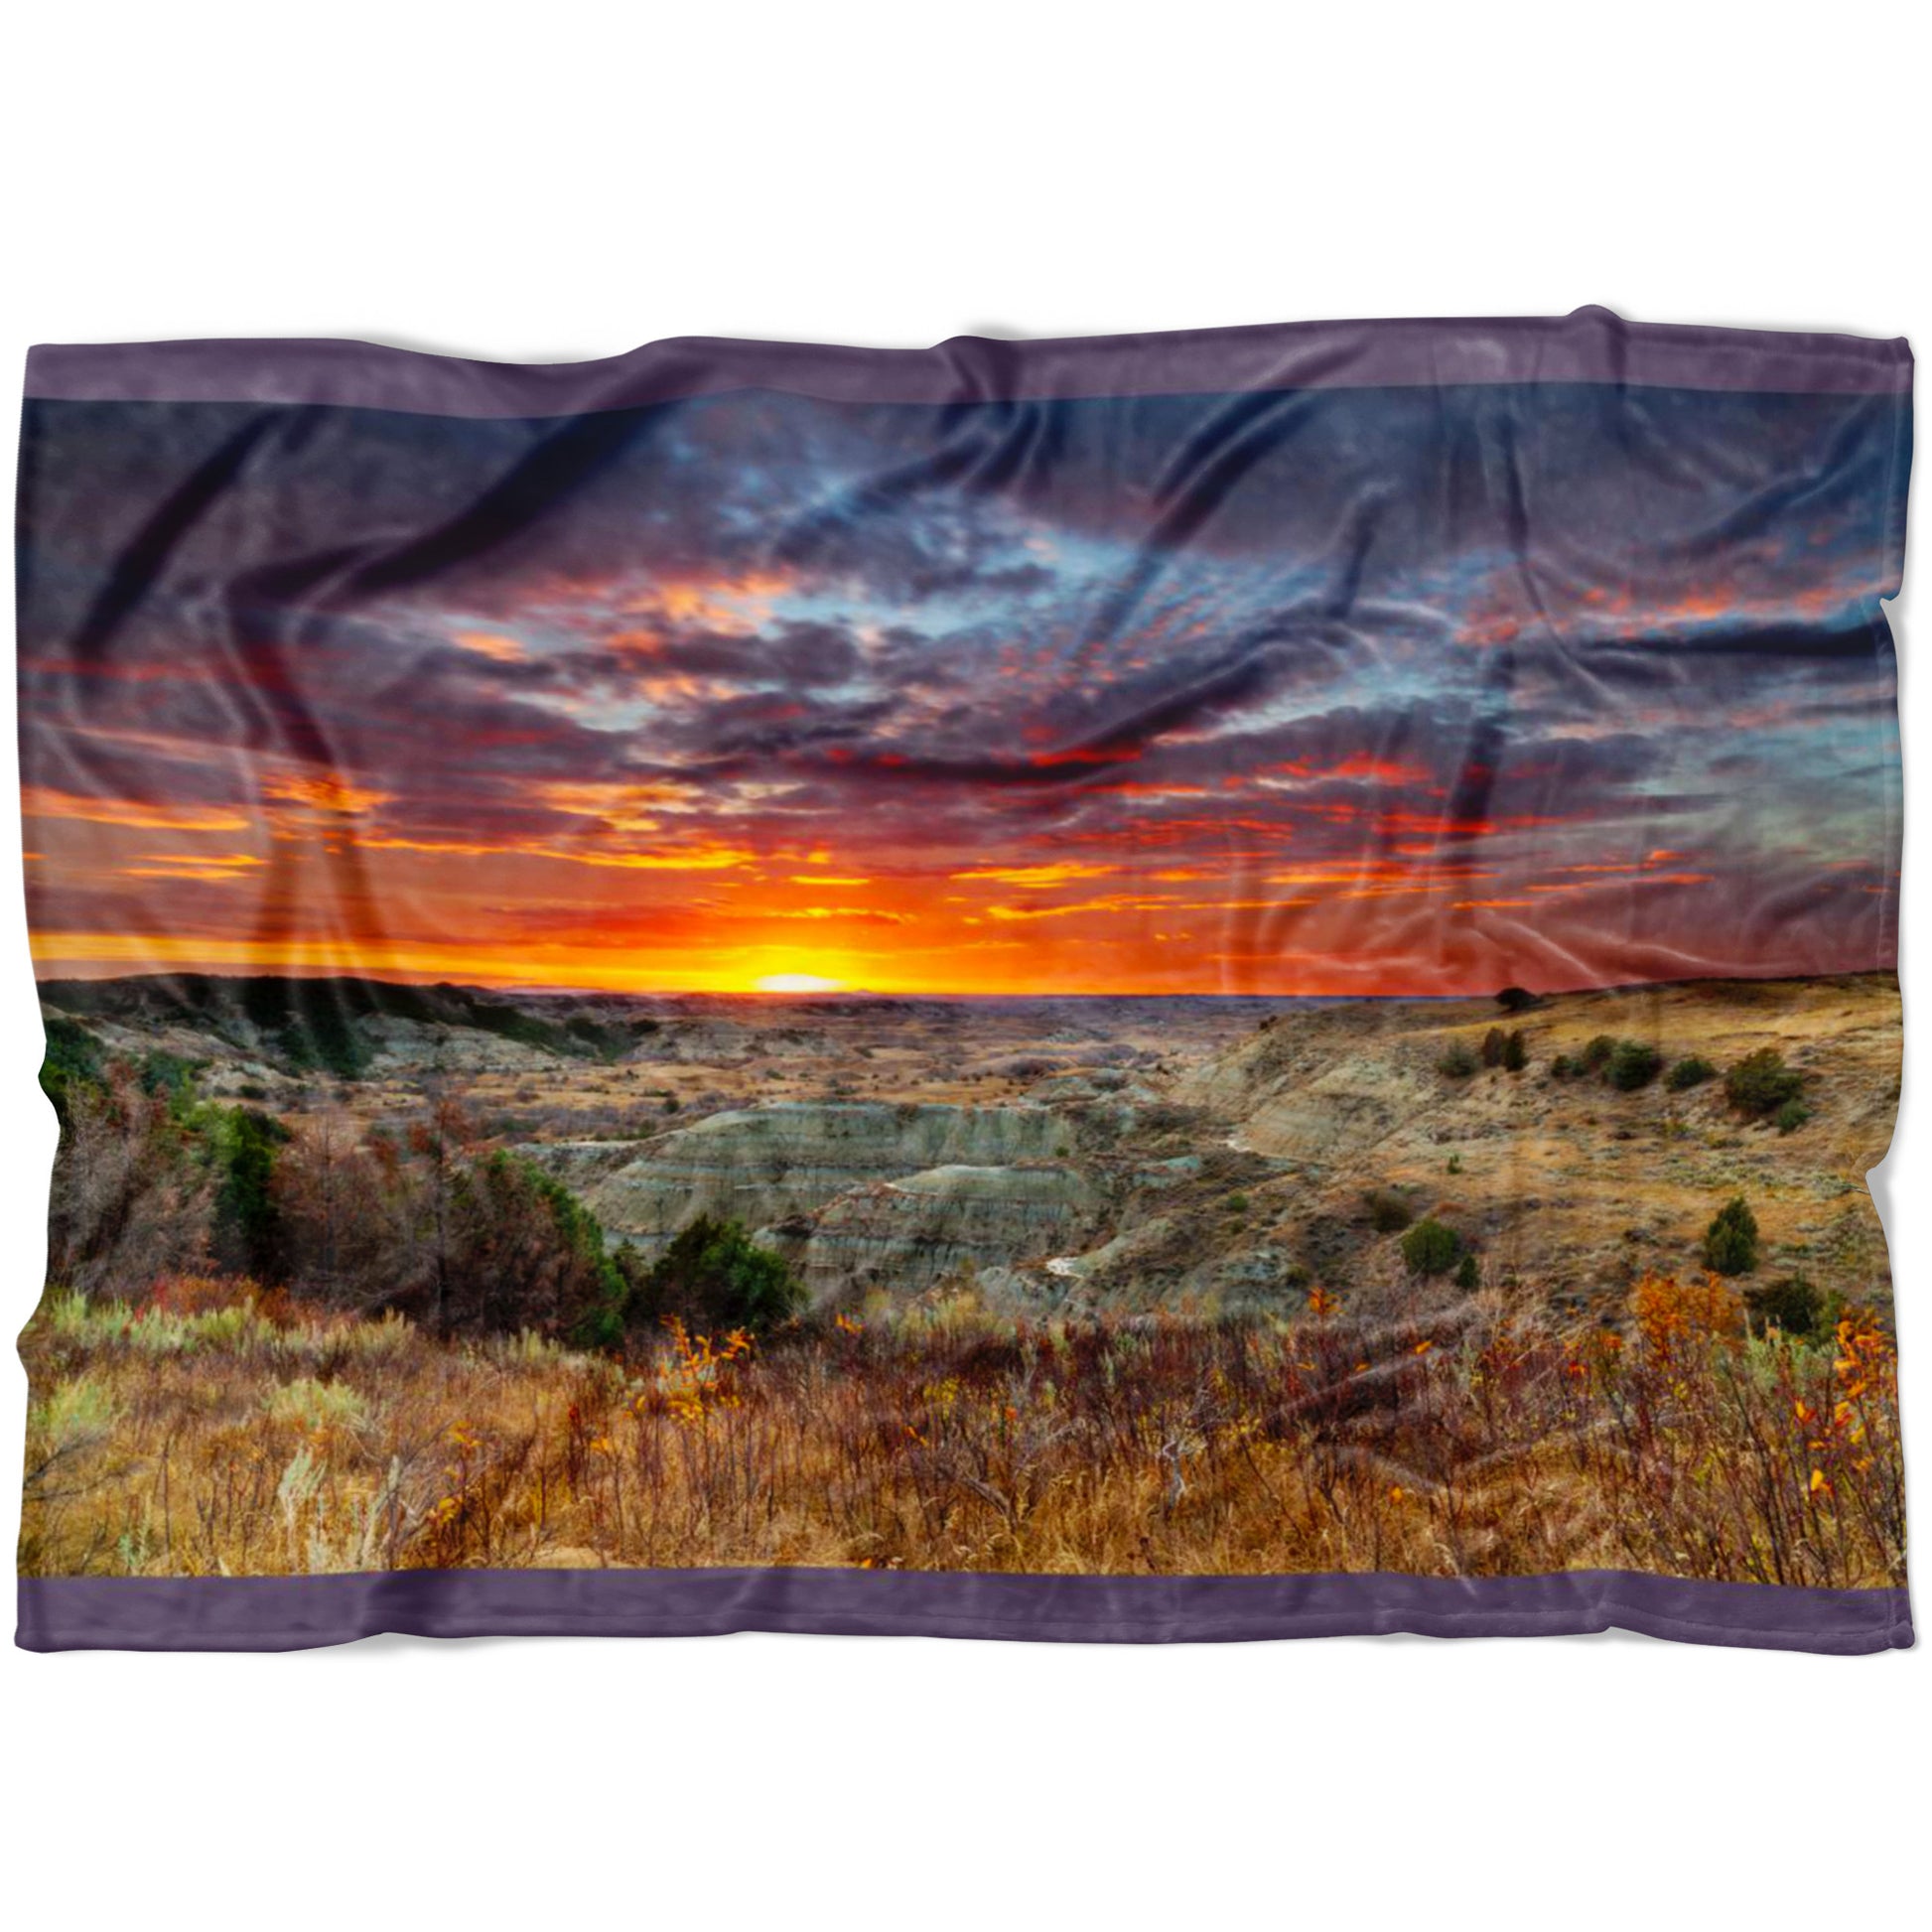 Badlands Blanket by Roxanne Westman